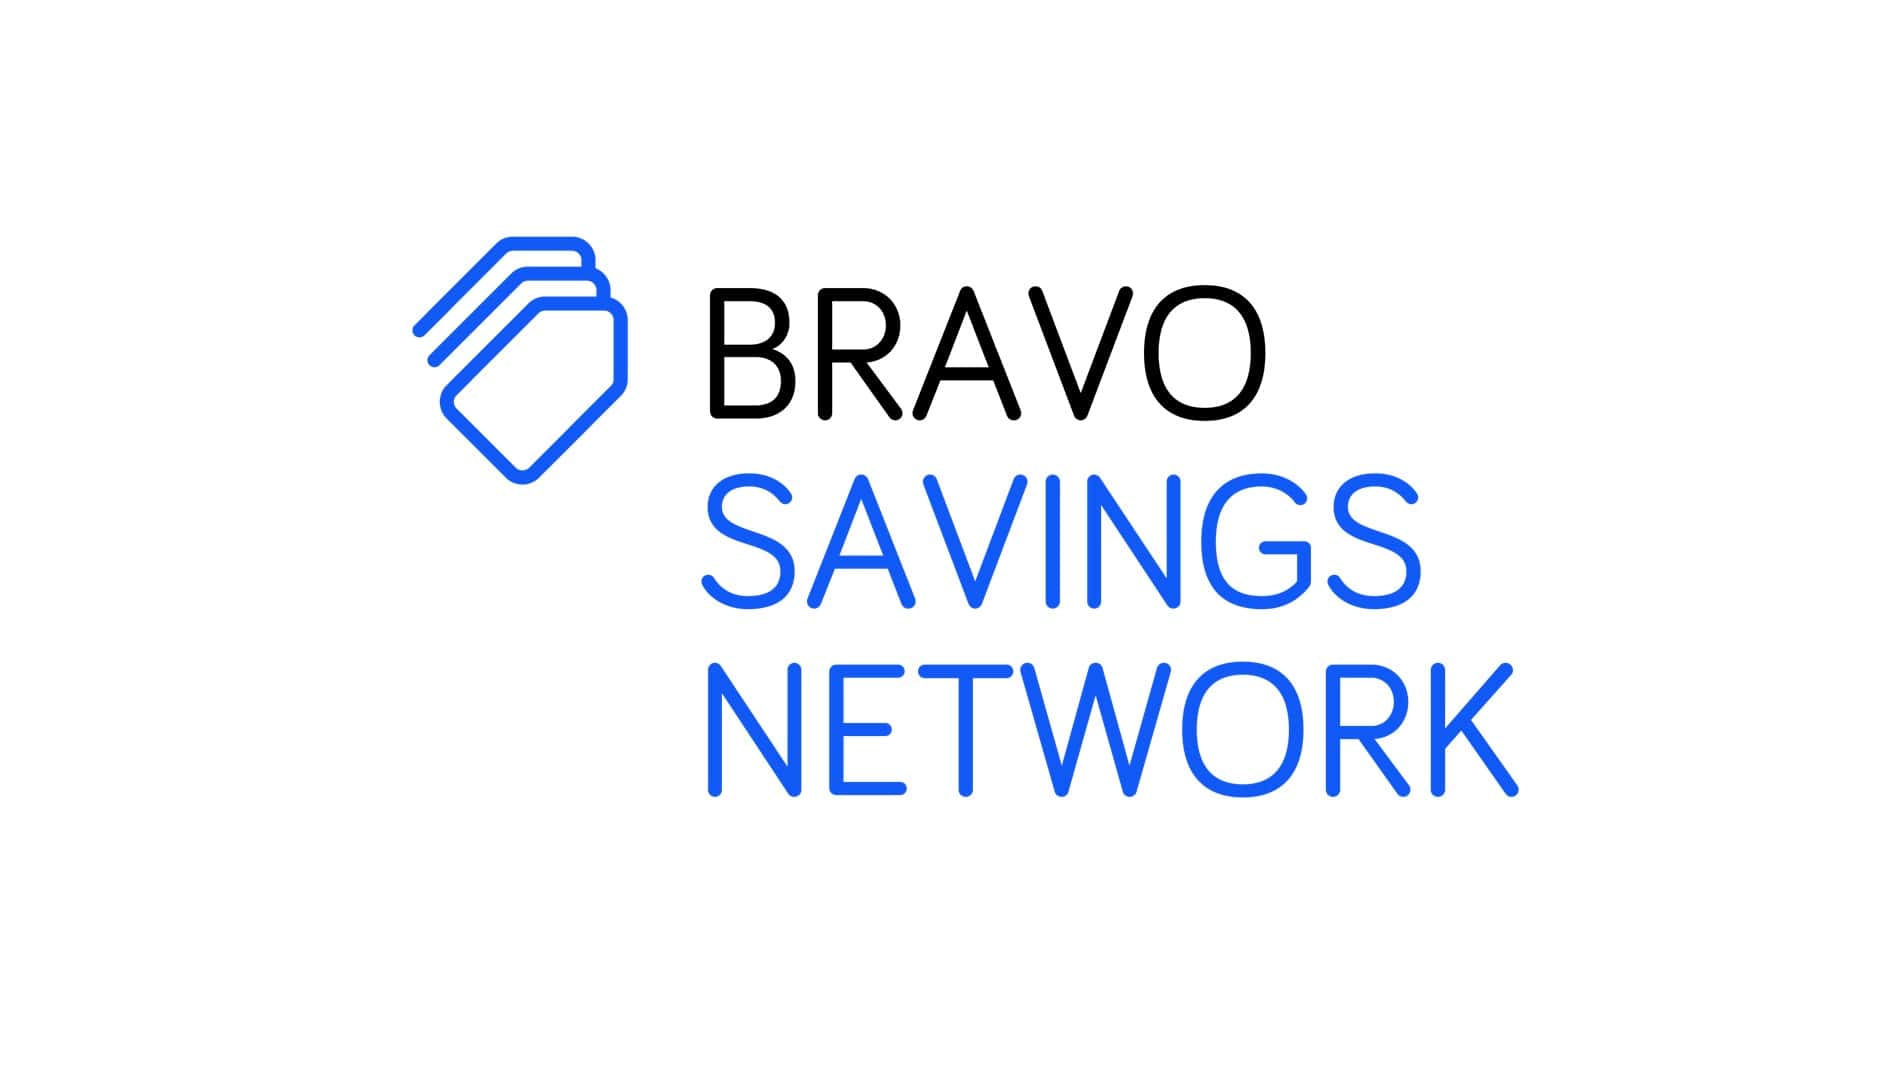 Bravo Savings Network Thought Leadership PR case study